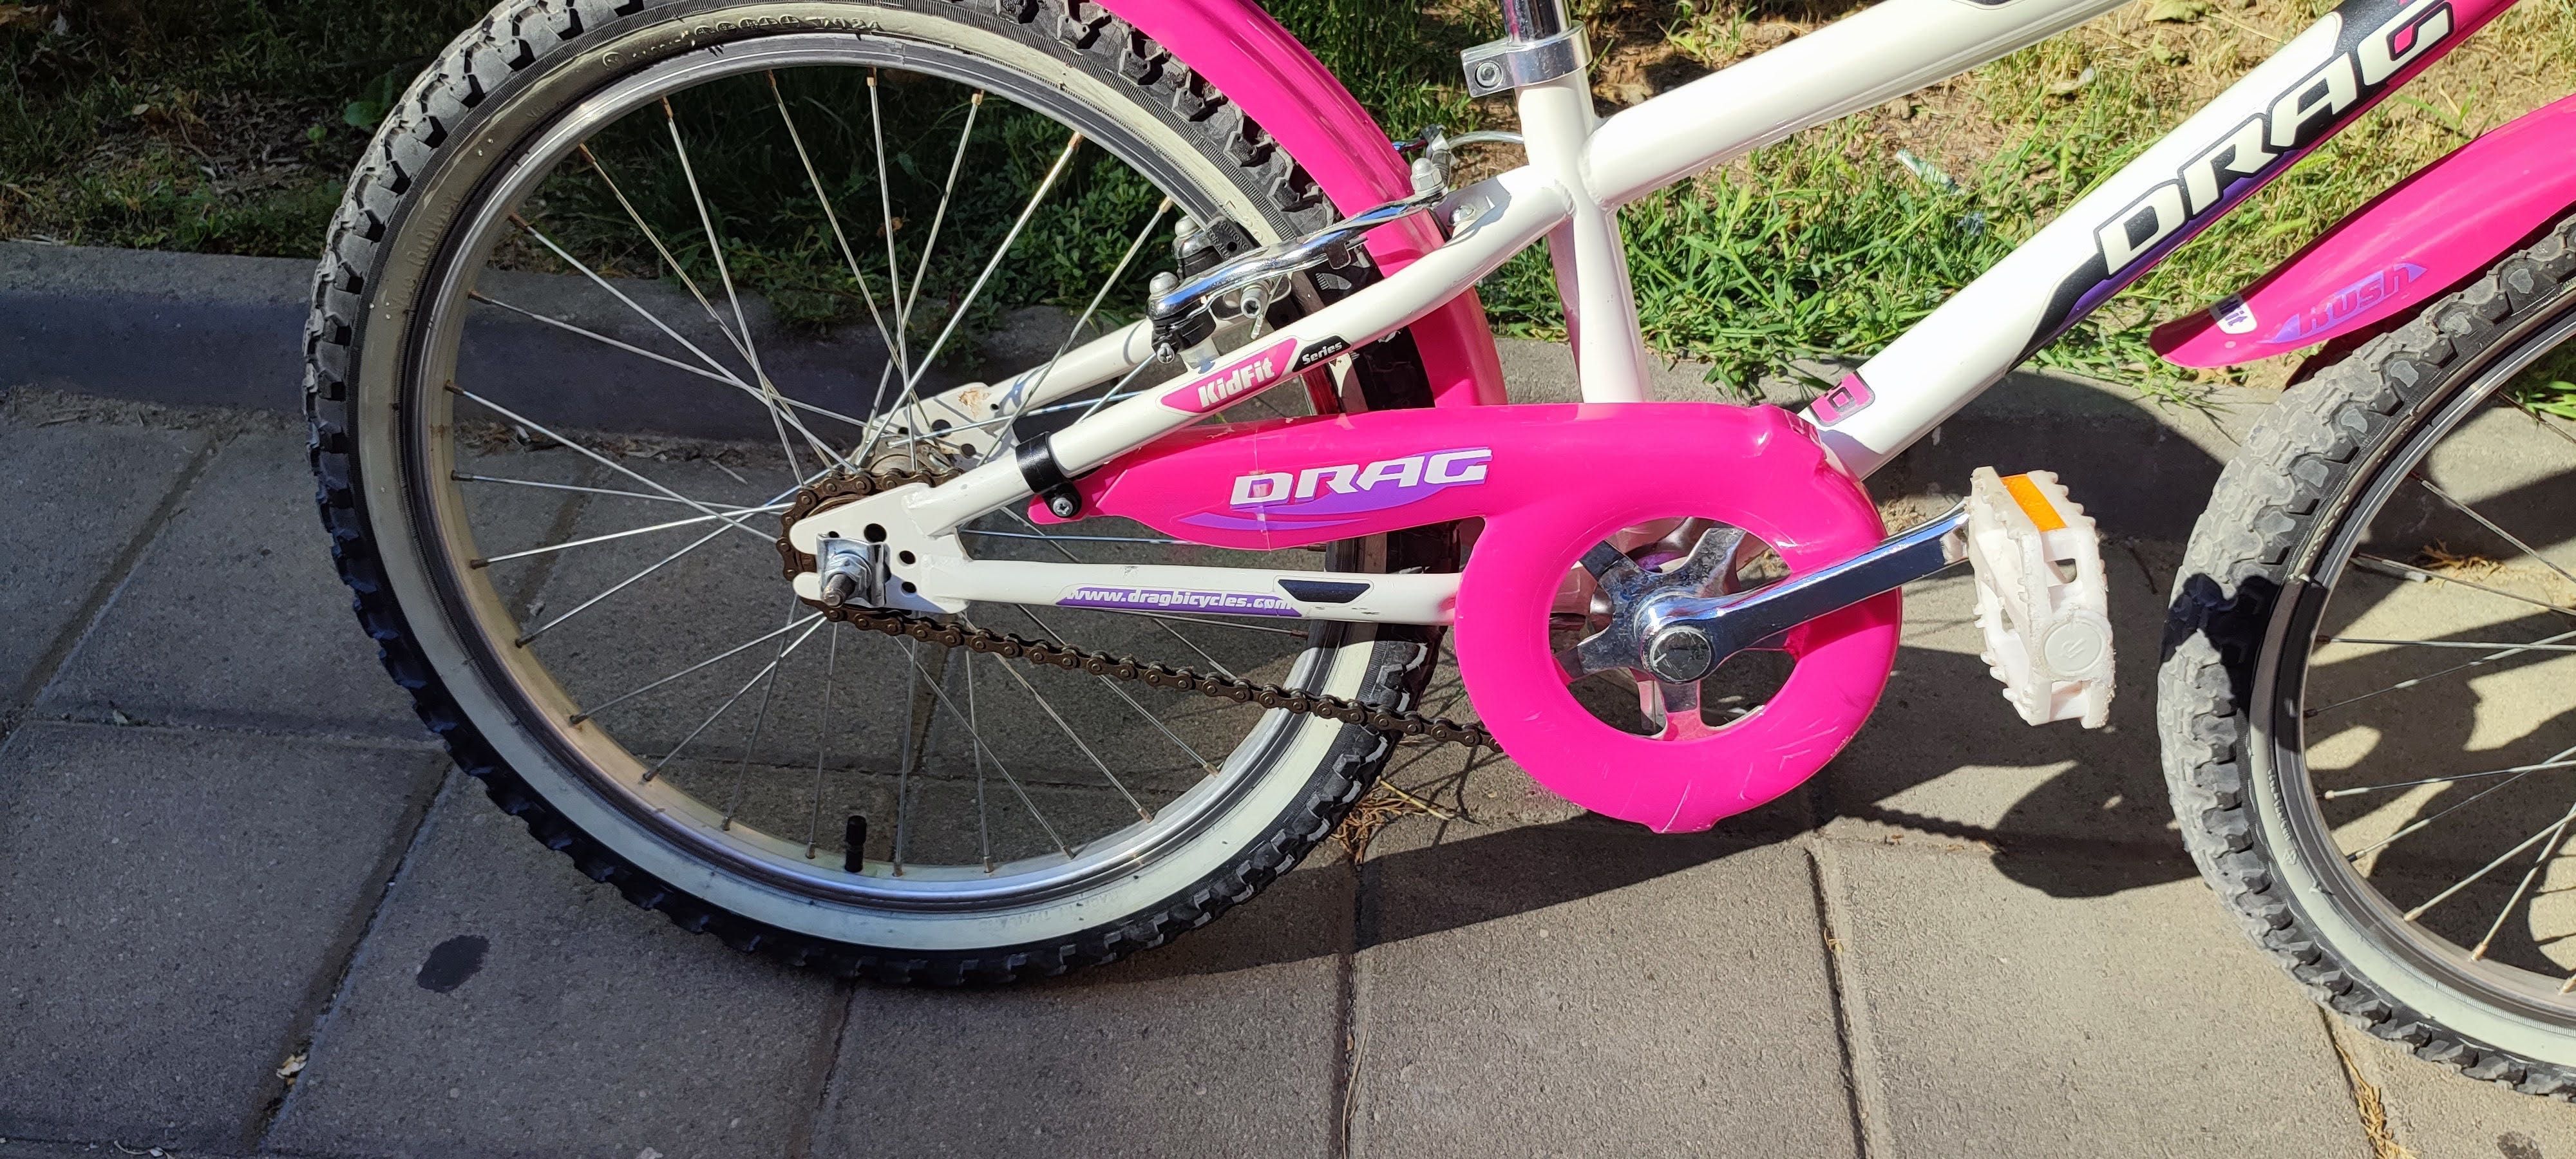 Велосипед Drag в розов цвят